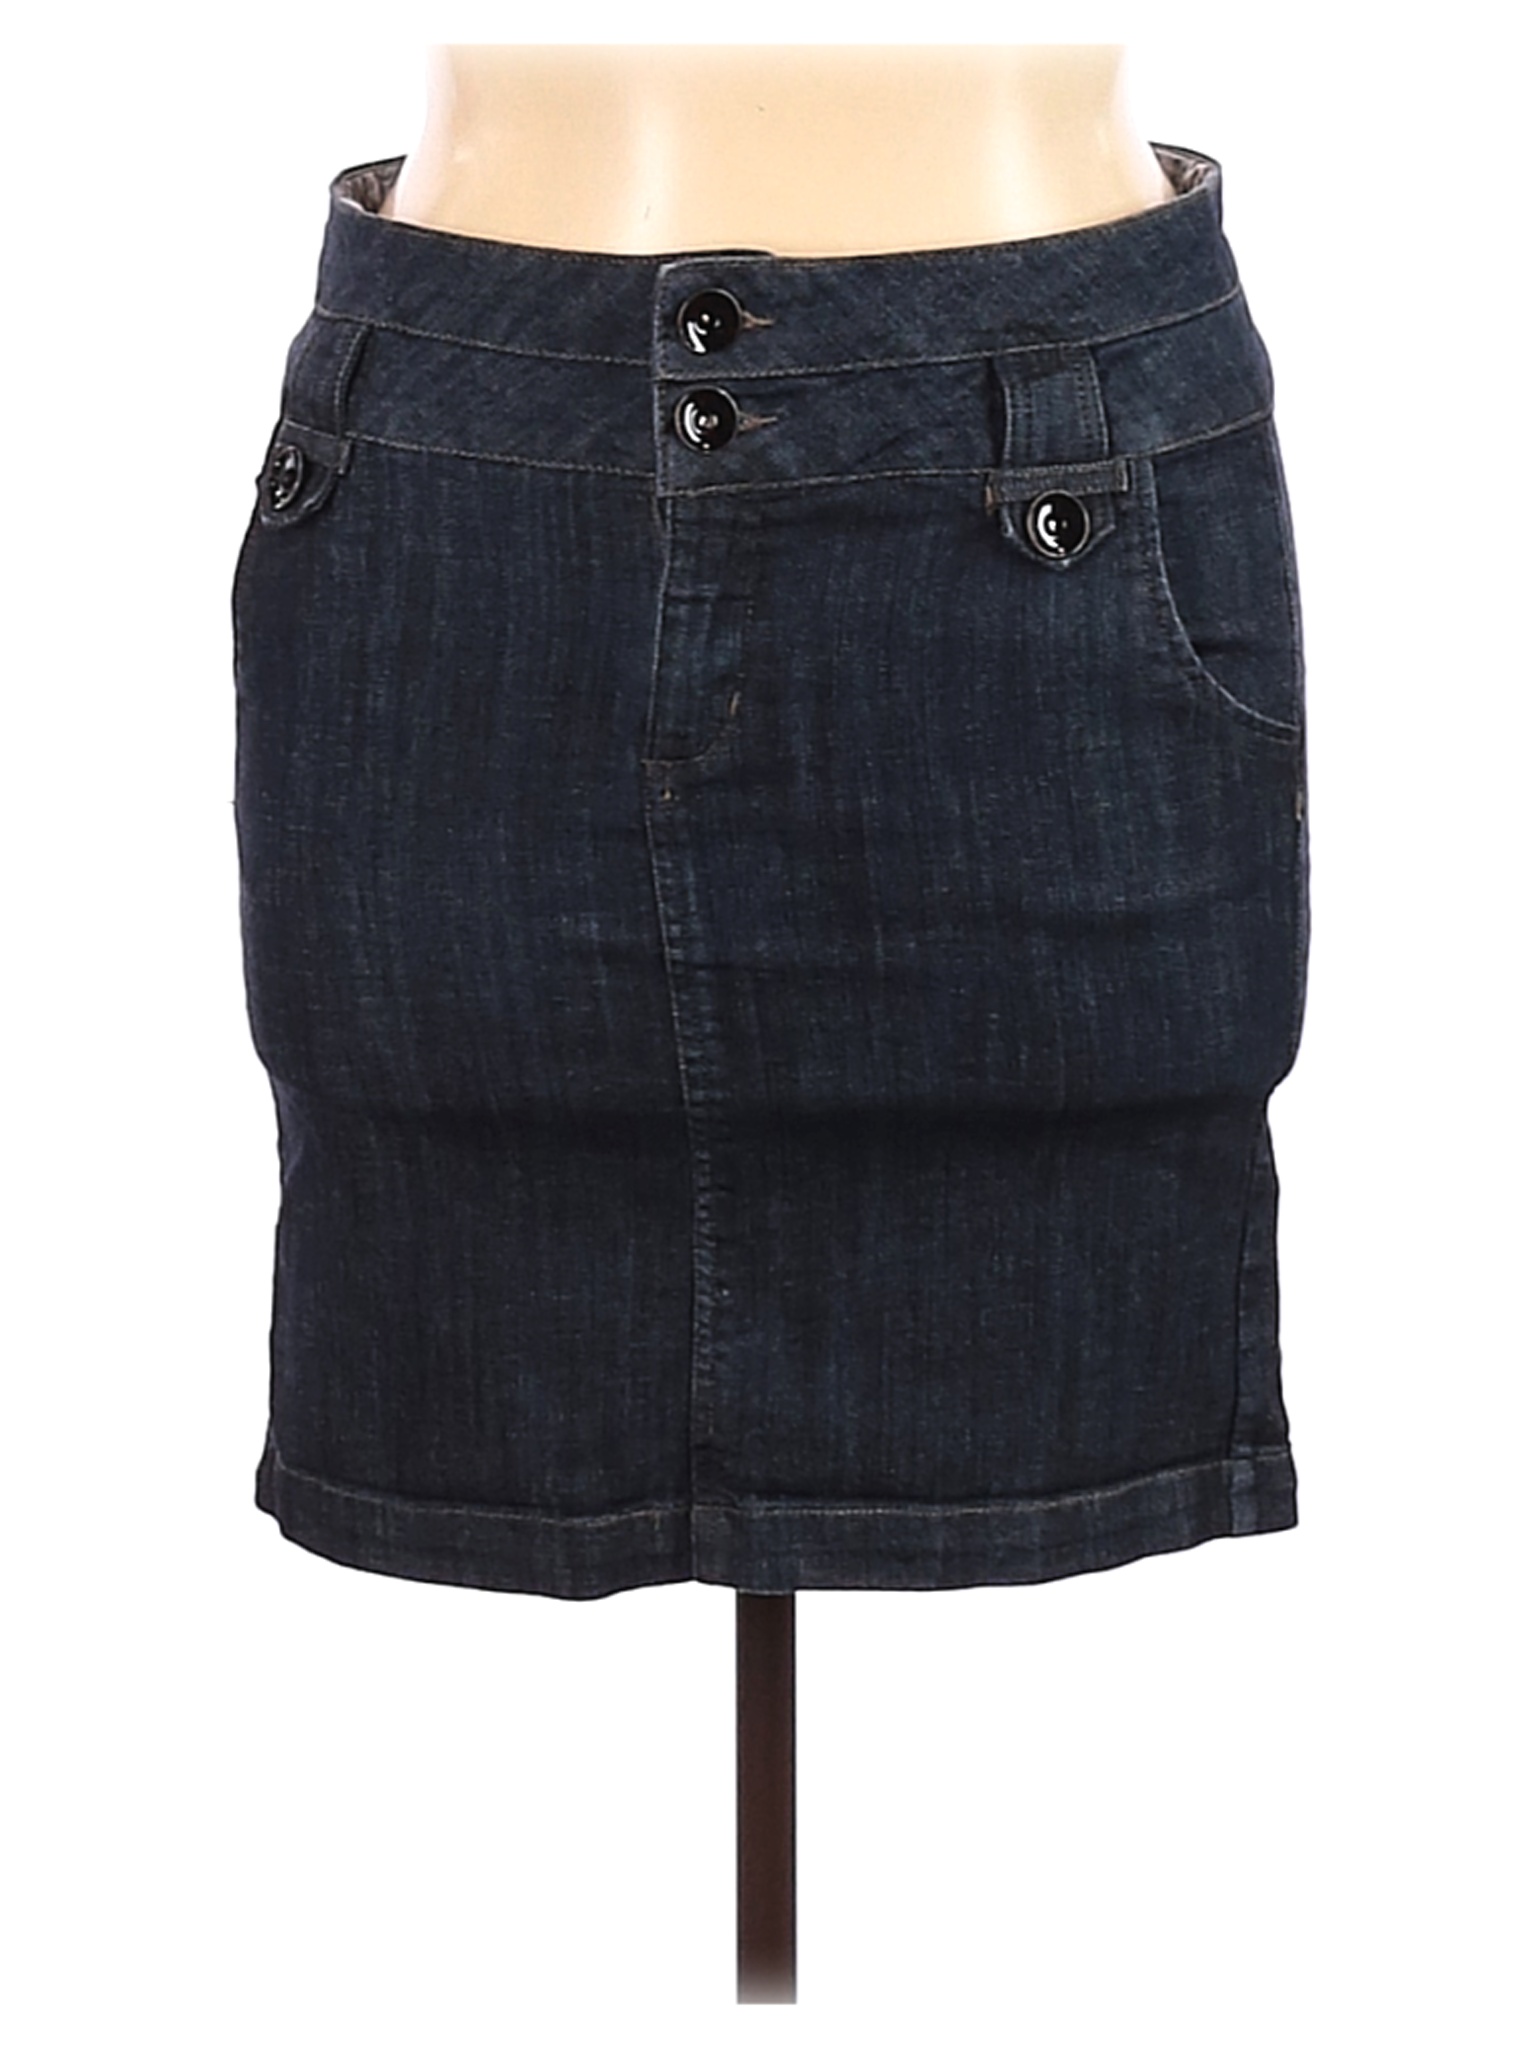 Boom Boom Jeans Women Black Denim Skirt XL | eBay